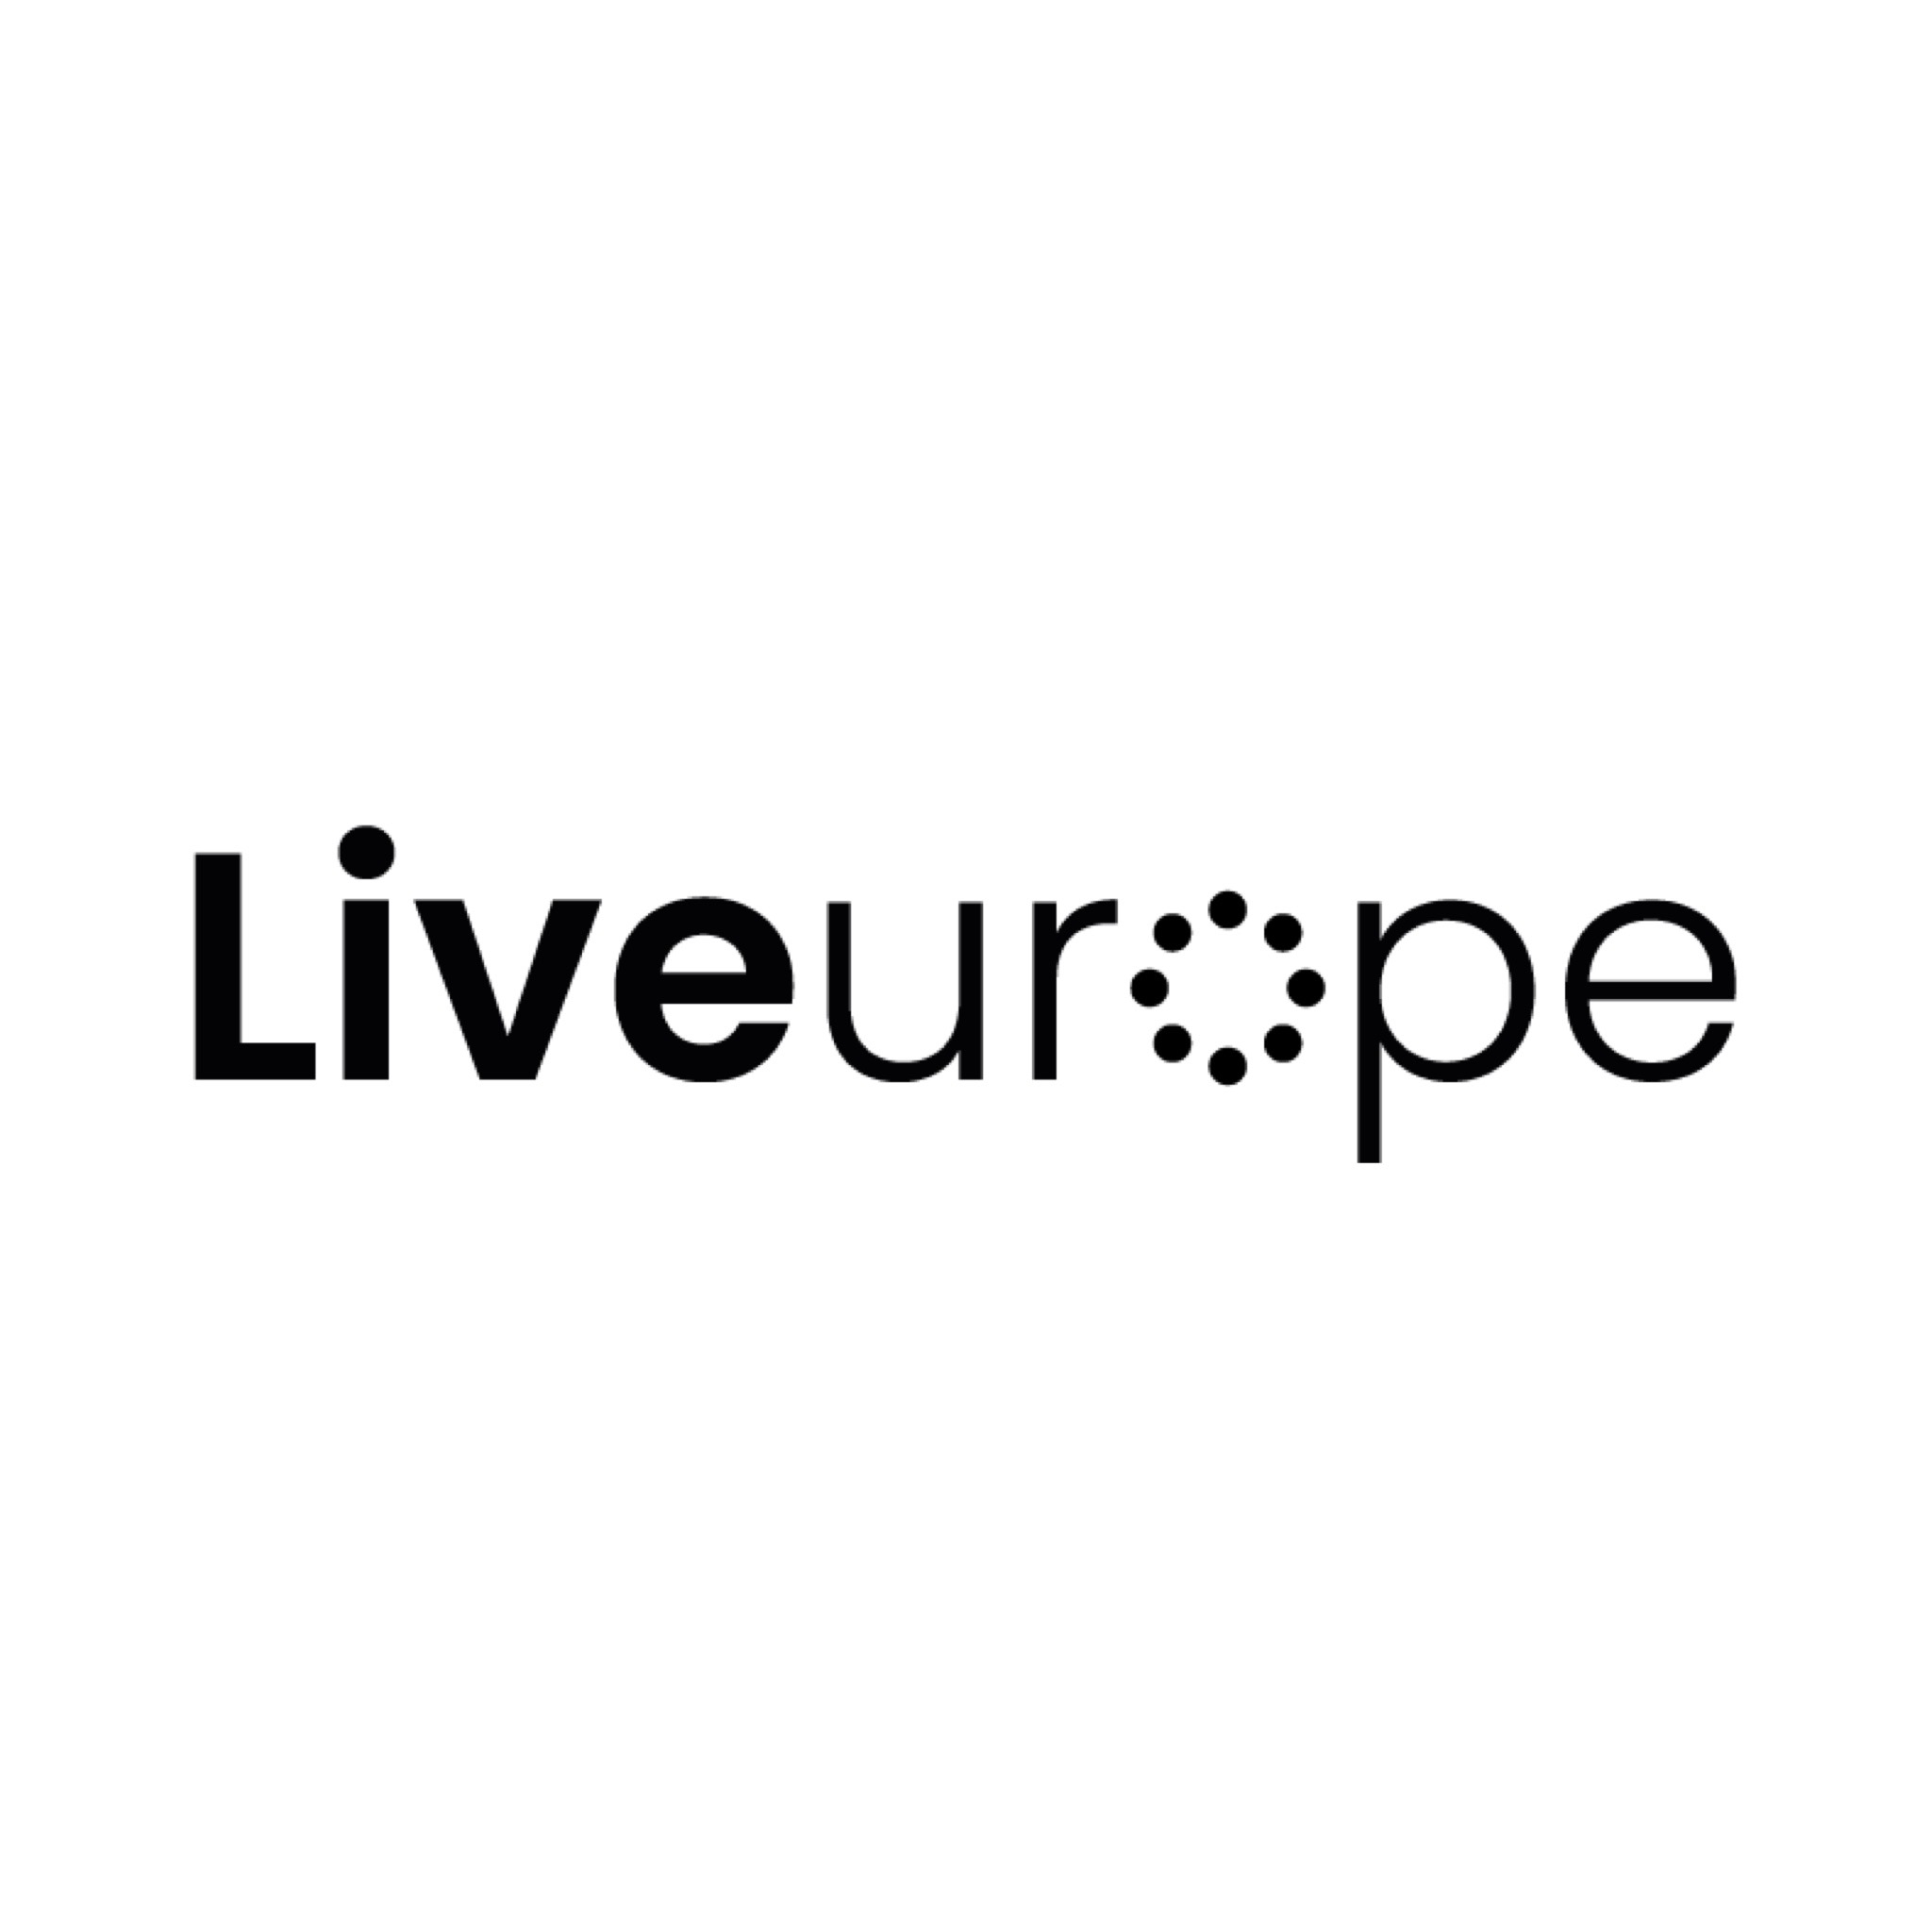 Liveurope